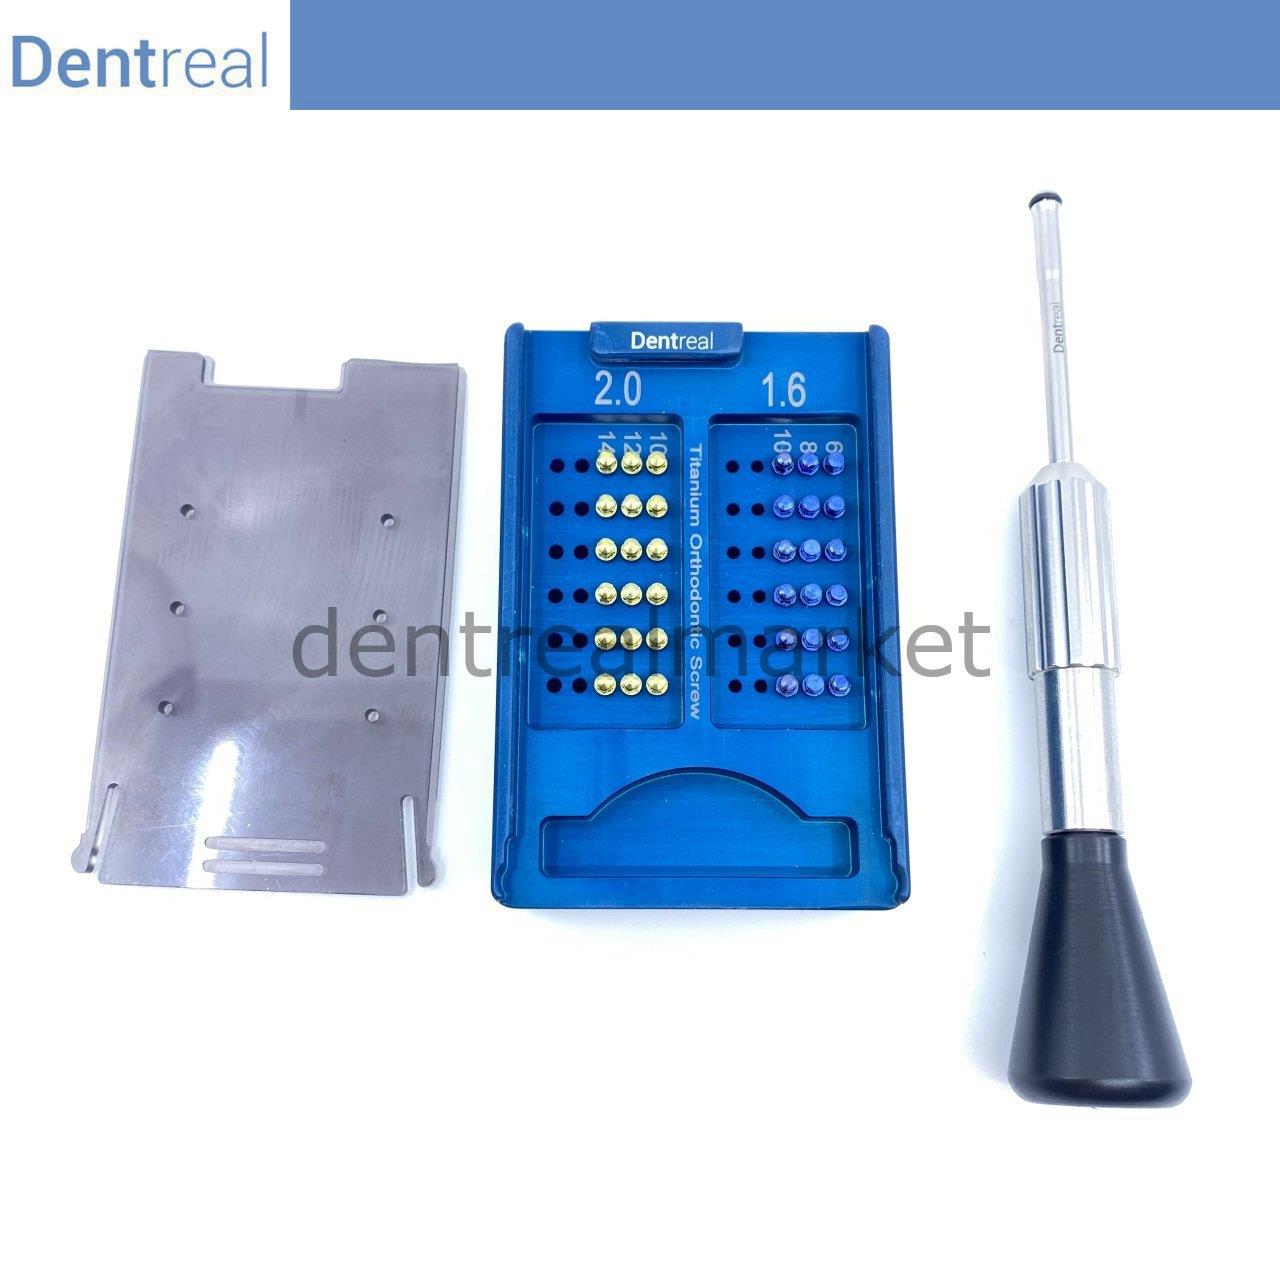 DentrealStore - Dentreal Orthofix Titanyum Orthodontic Mini Screw Full Pro Kit - Orthodontic Mini Implant